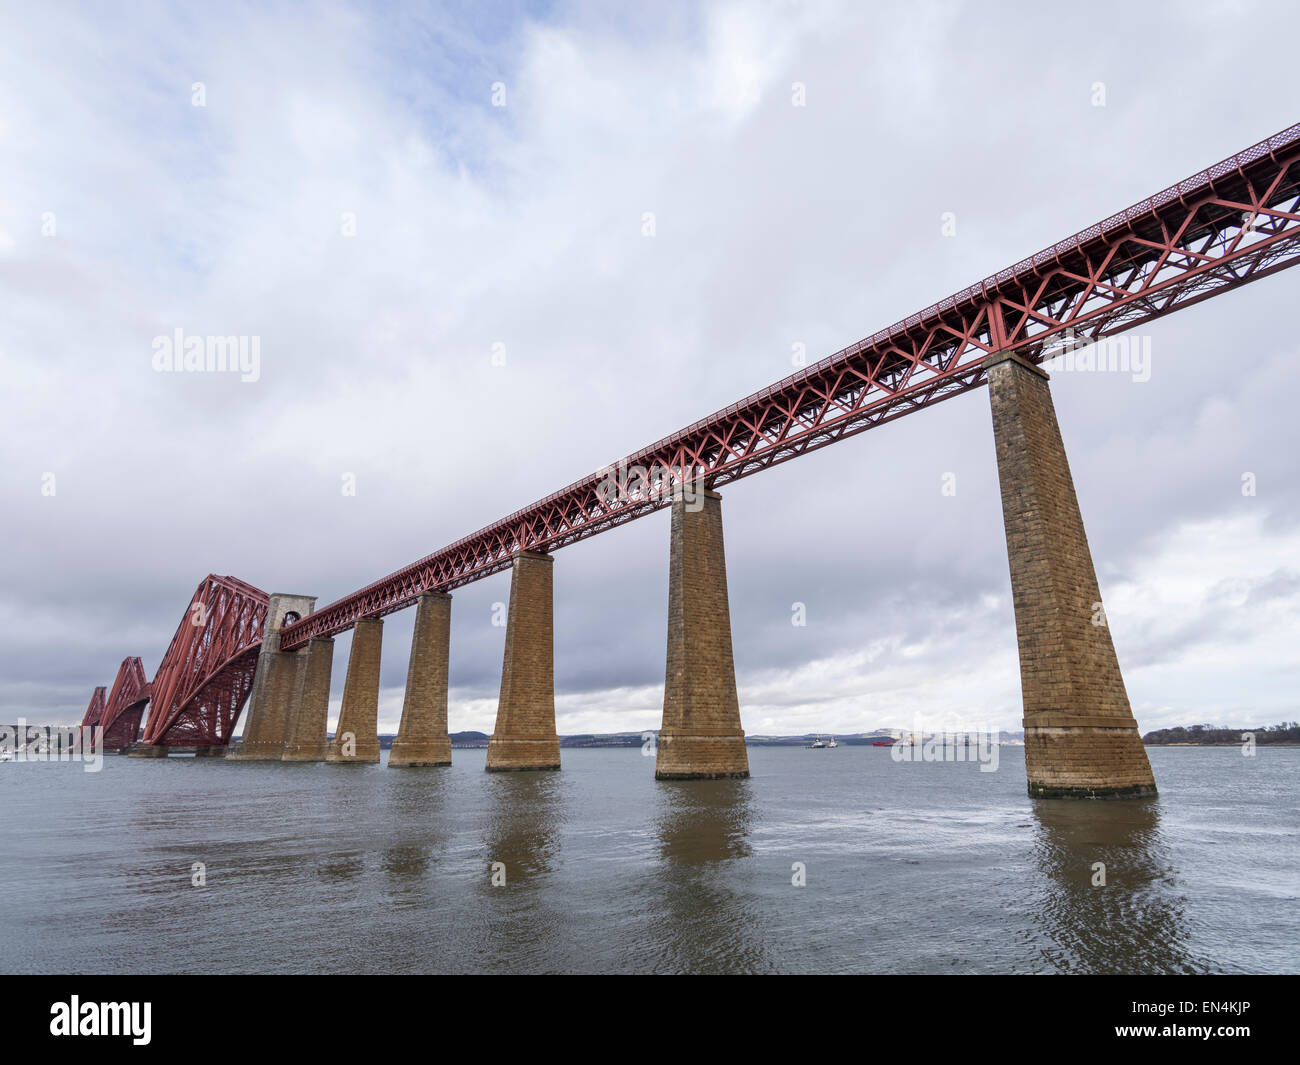 Forth Bridge, puente ferroviario en voladizo sobre el Firth of Forth, Edimburgo, Escocia, Reino Unido Foto de stock